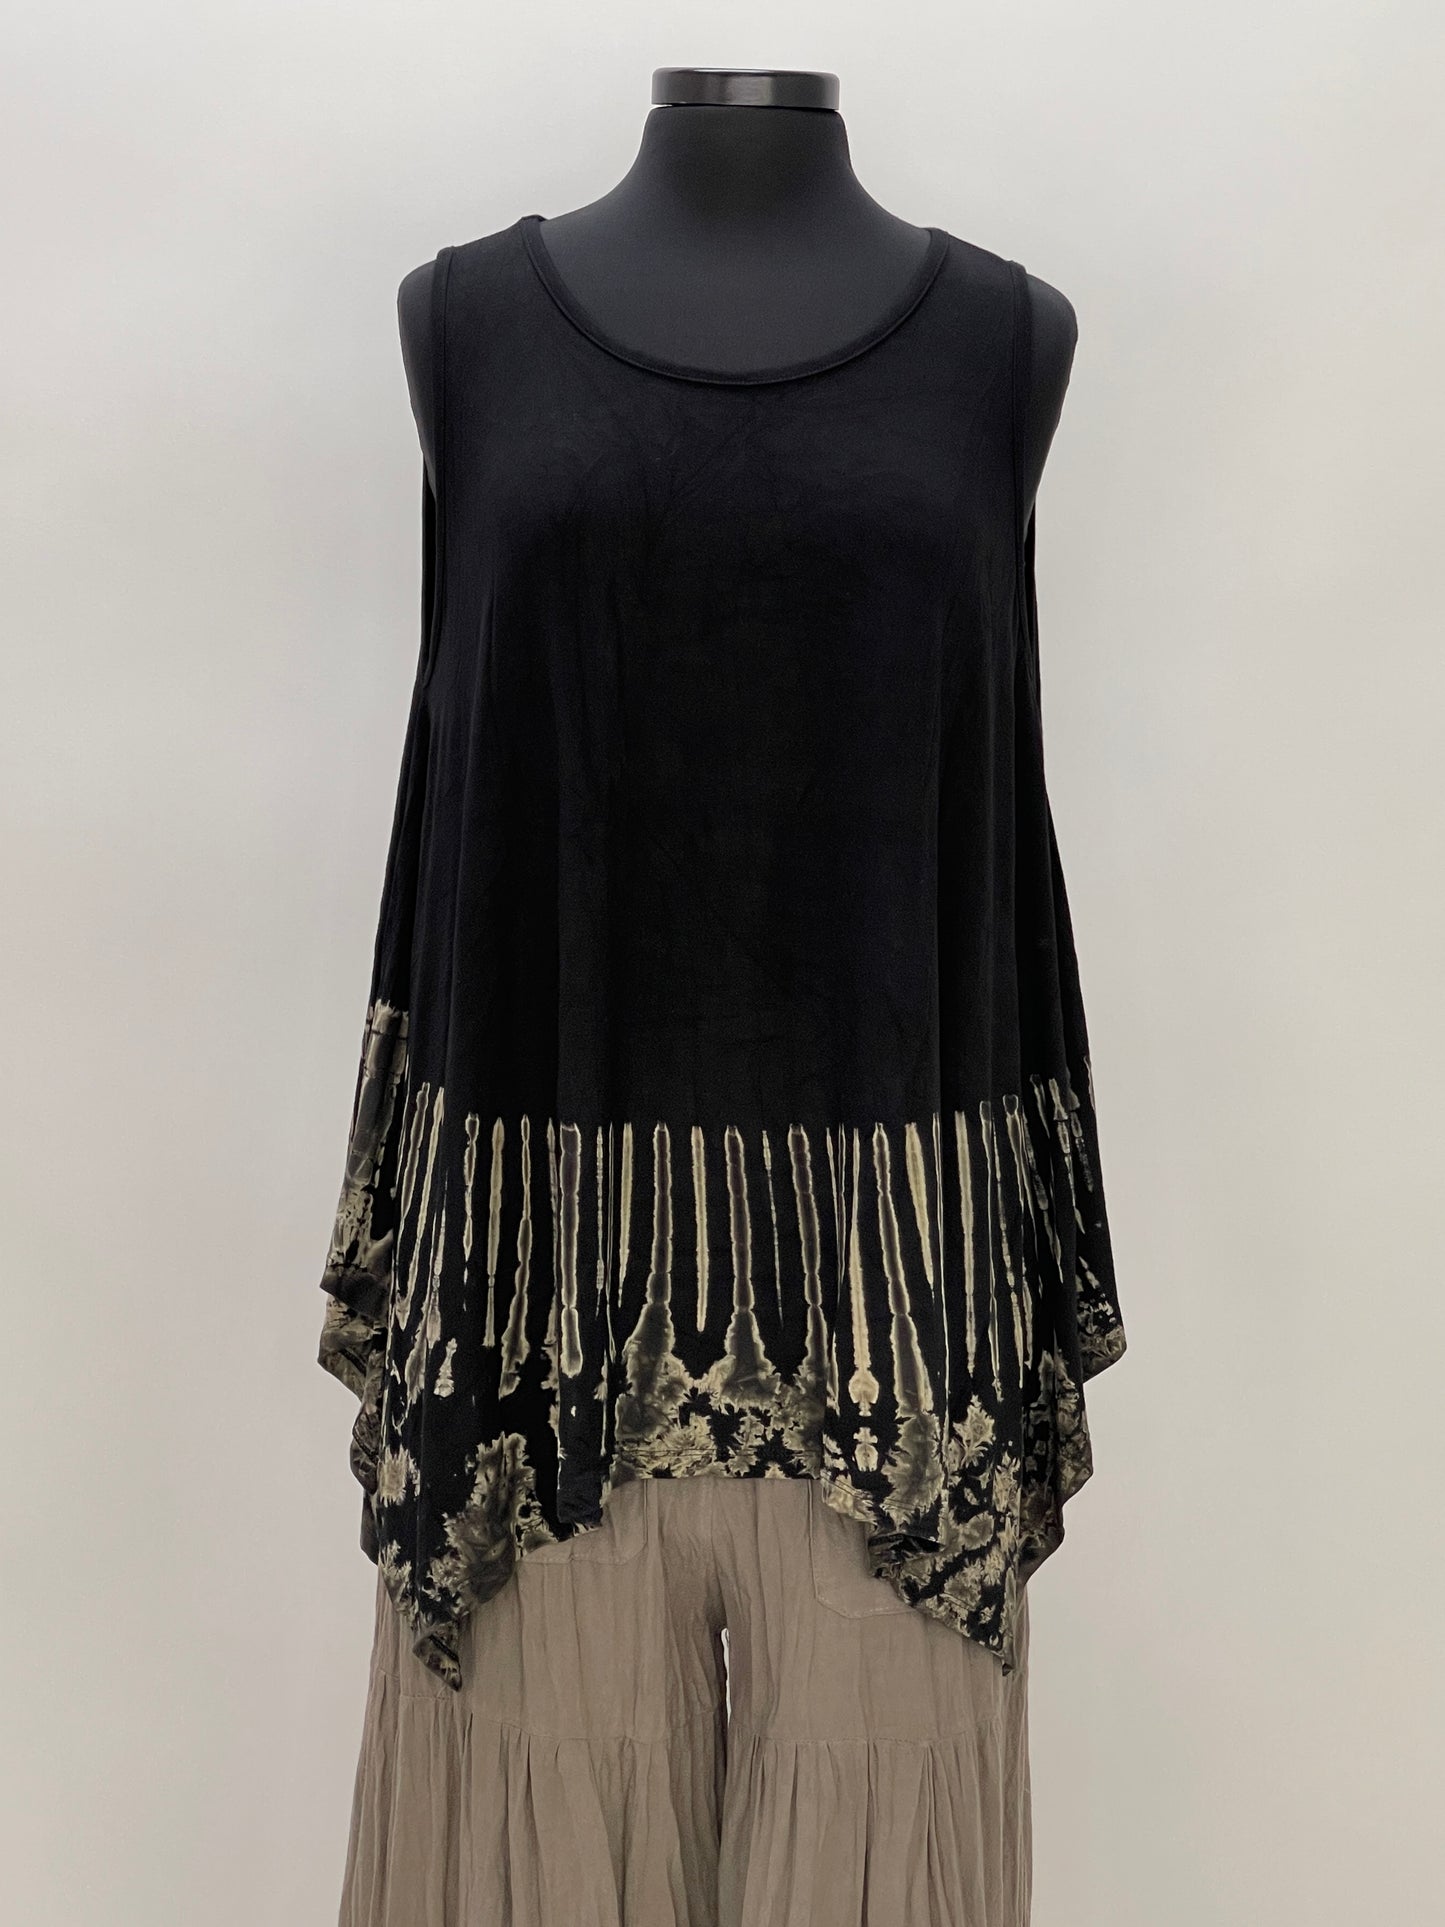 Sleeveless Top with Black/Beige Tie Dye - One Size